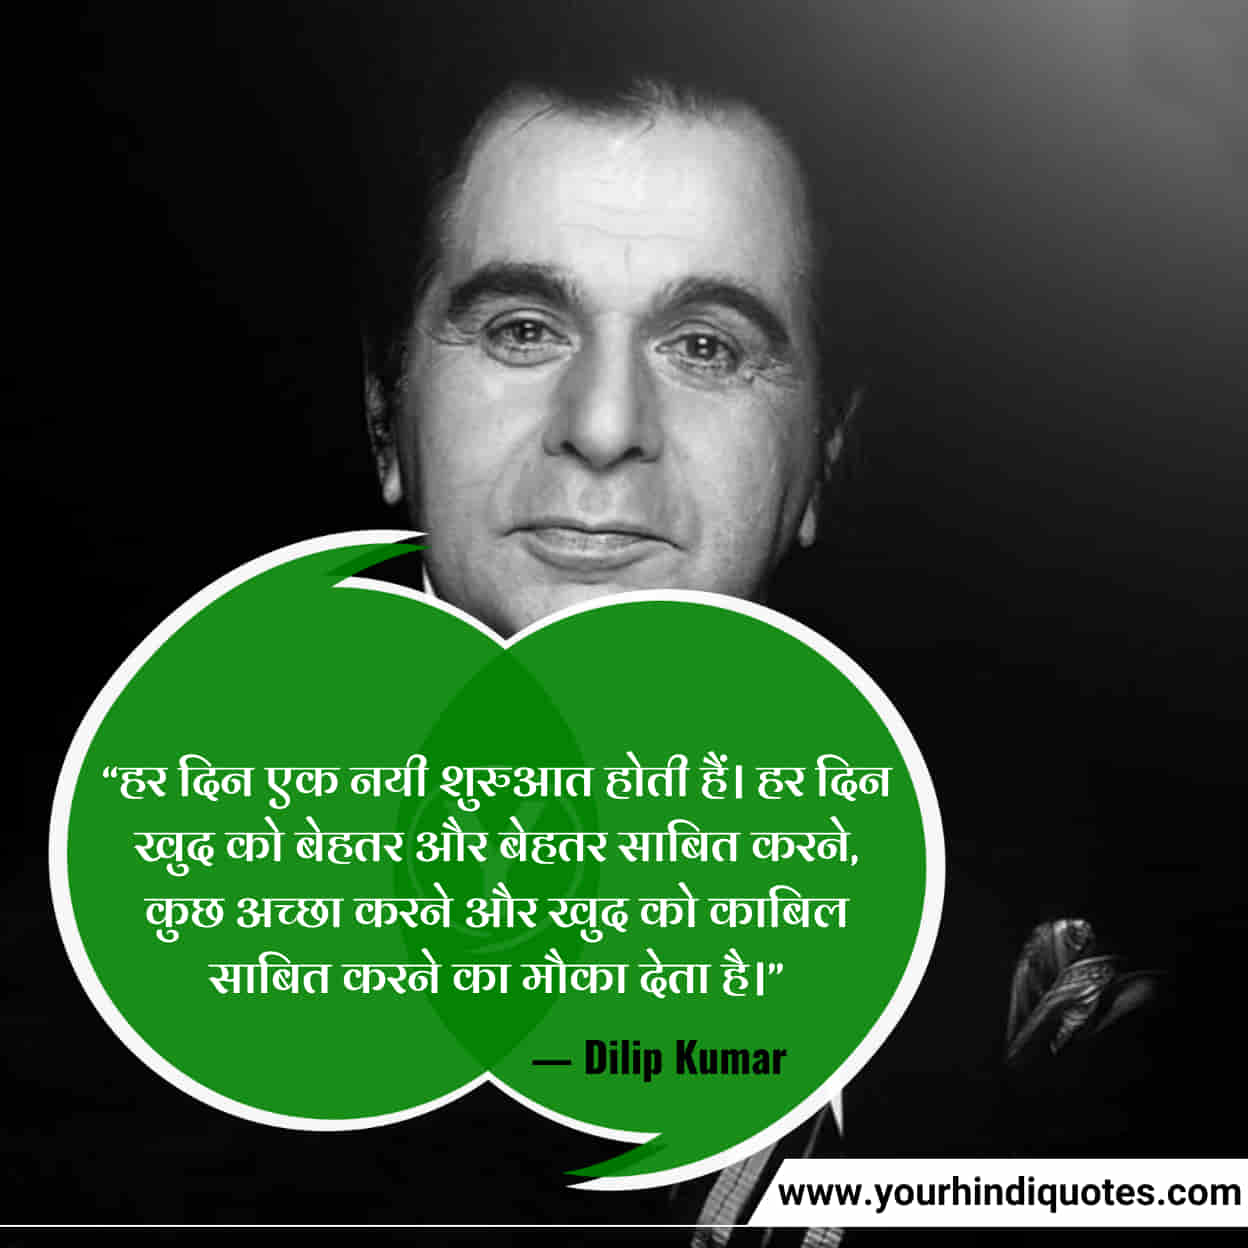 Dilip Kumar Hindi Quotes on Bollywood